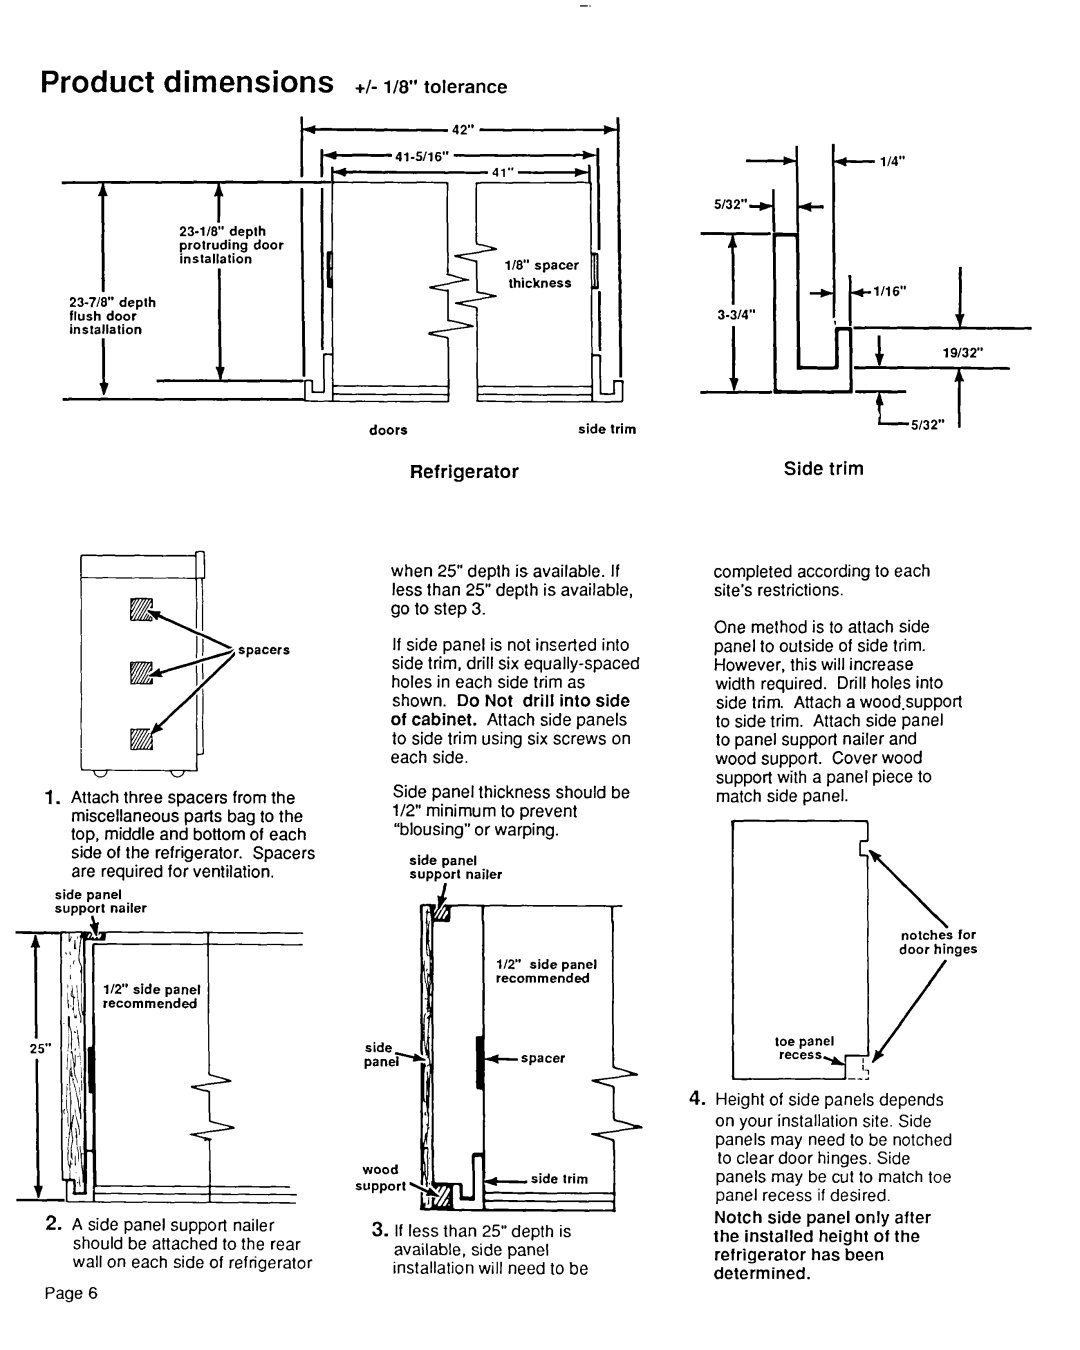 KitchenAid 2000495 installation instructions Product dimensions +/- I/W tolerance, Refrigerator, Side trim 